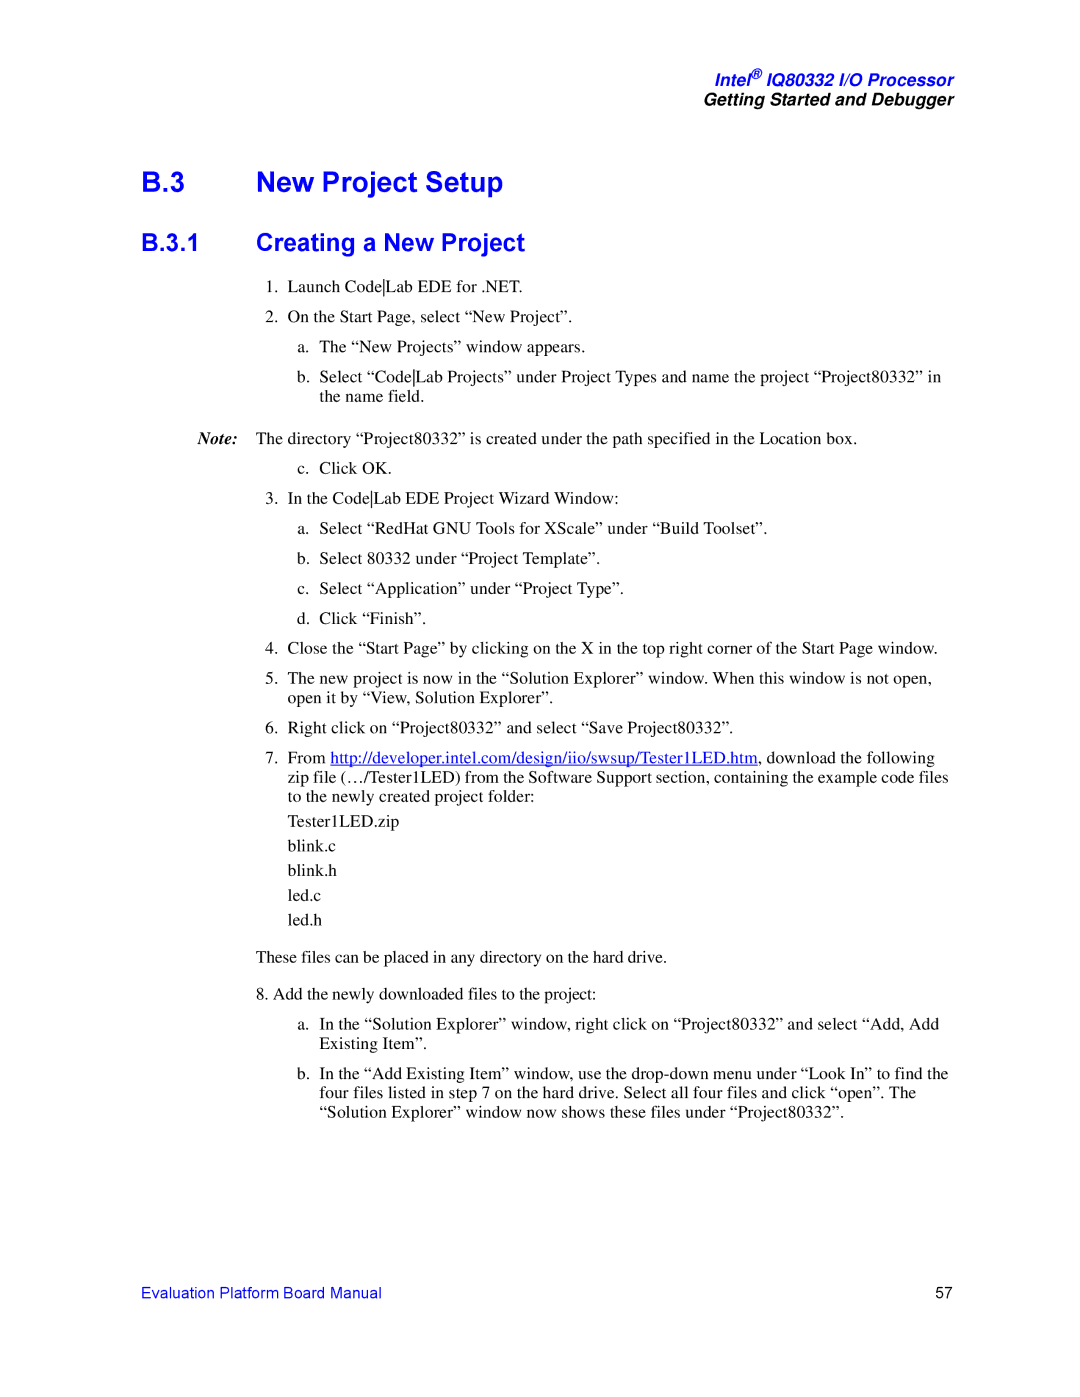 Intel IQ80332 manual New Project Setup, Creating a New Project 